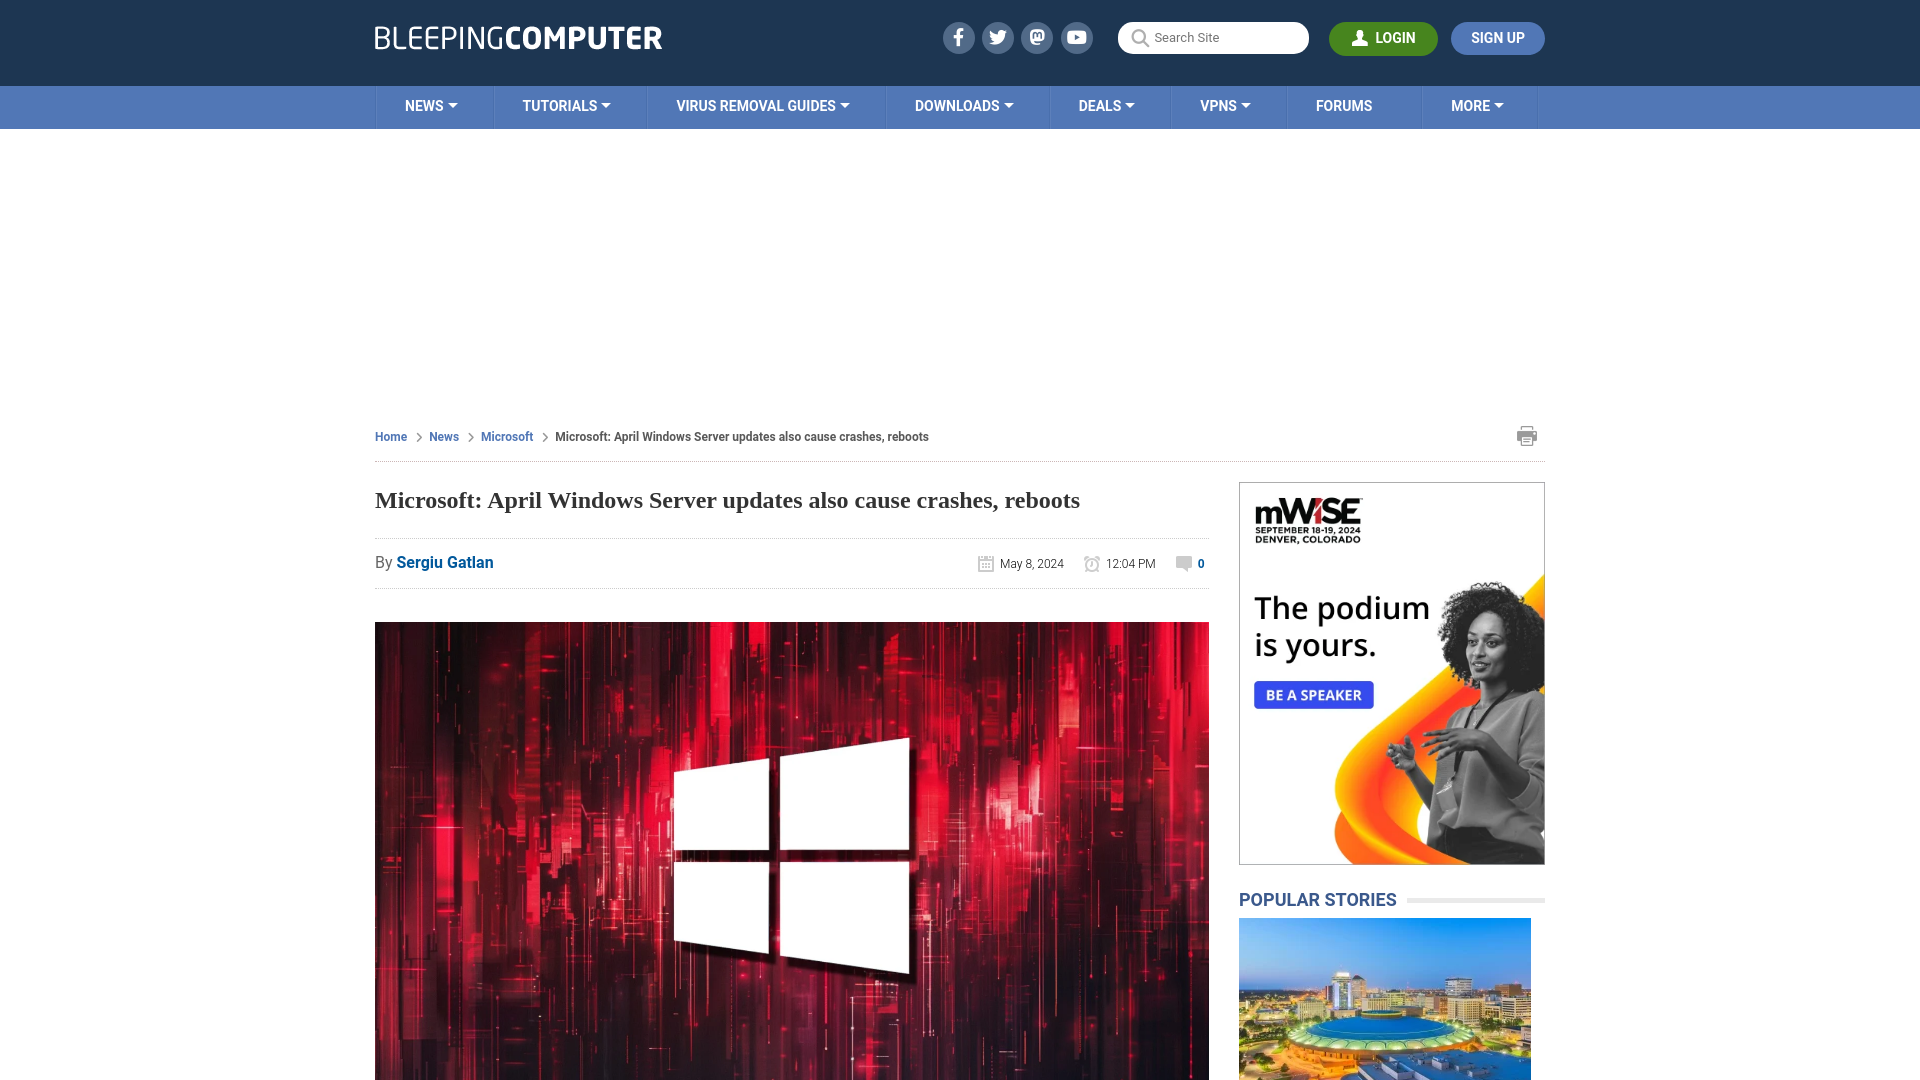 Microsoft: April Windows Server updates also cause crashes, reboots